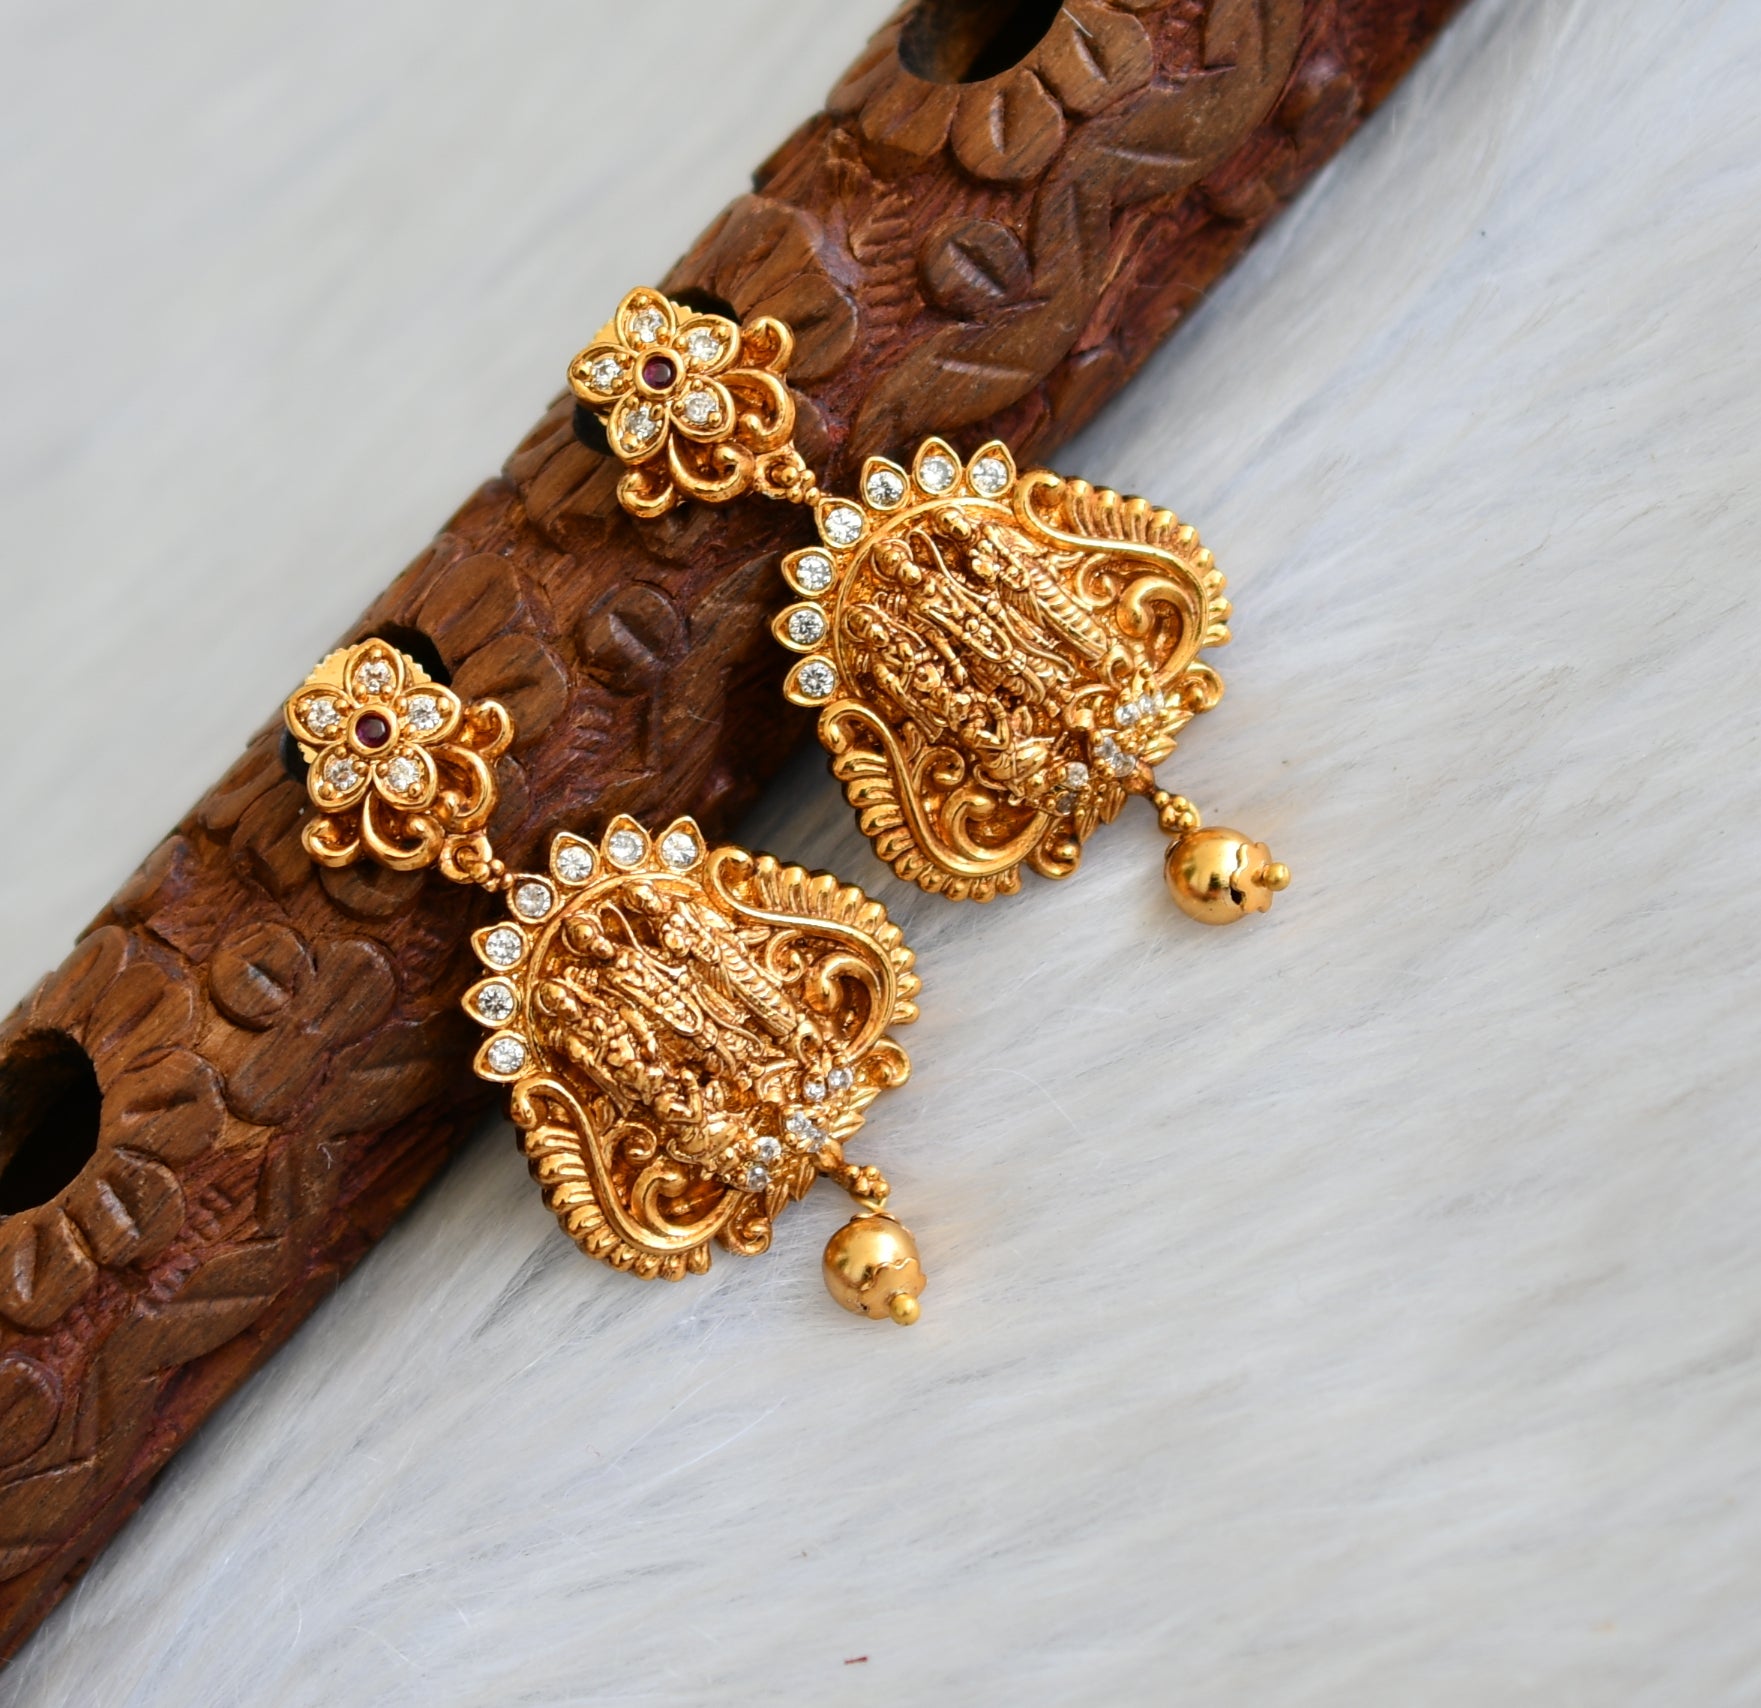 Beautiful Ram Parivar Matte Finish Necklace - South India Jewels